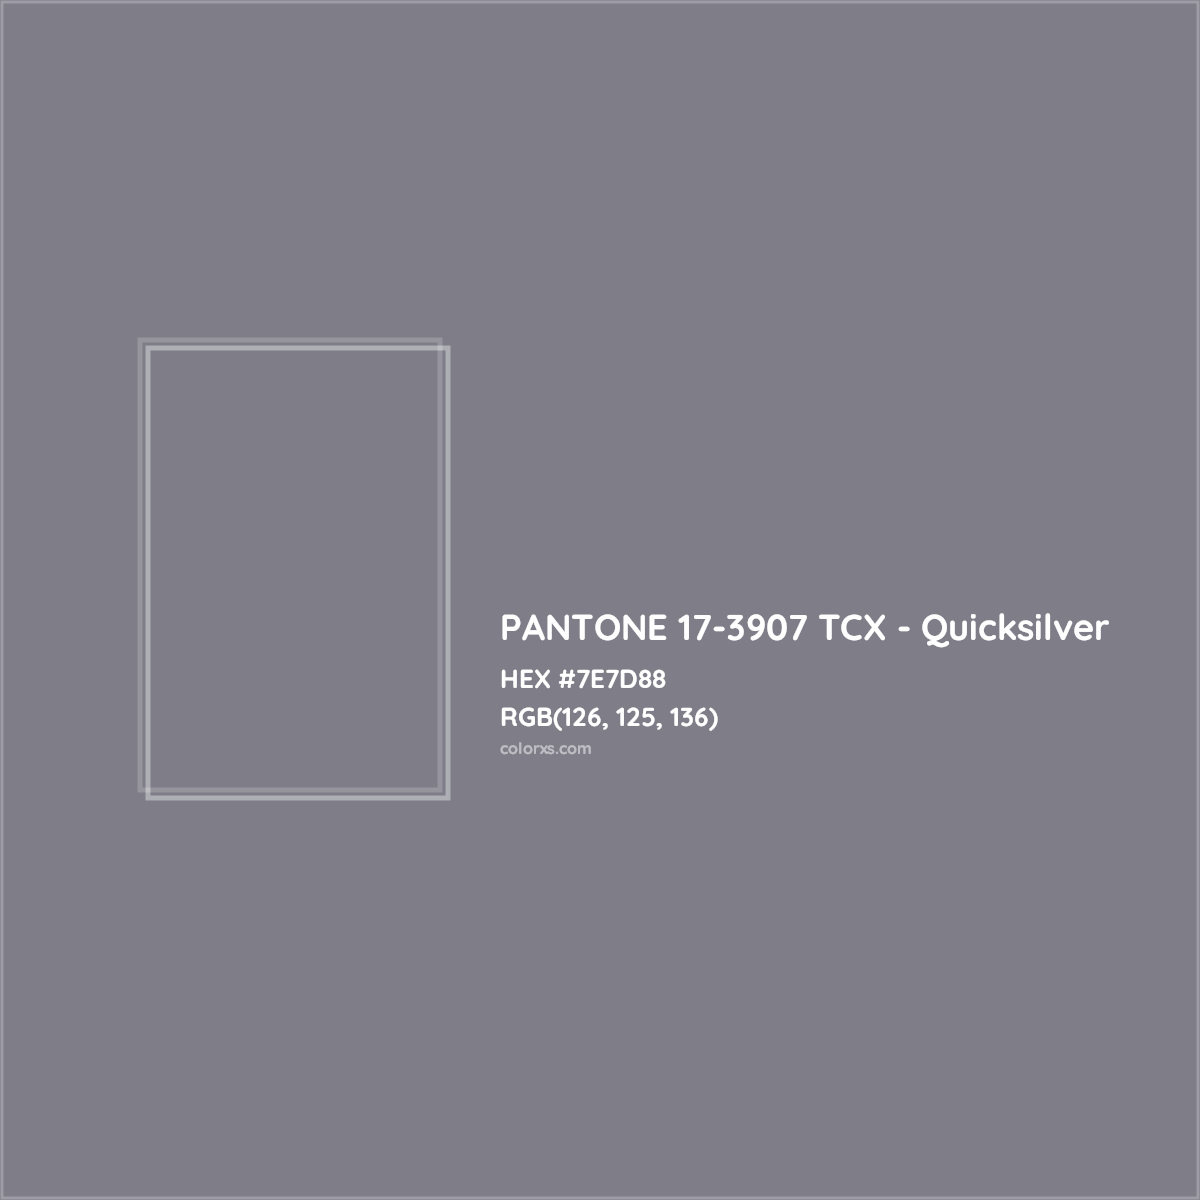 HEX #7E7D88 PANTONE 17-3907 TCX - Quicksilver CMS Pantone TCX - Color Code